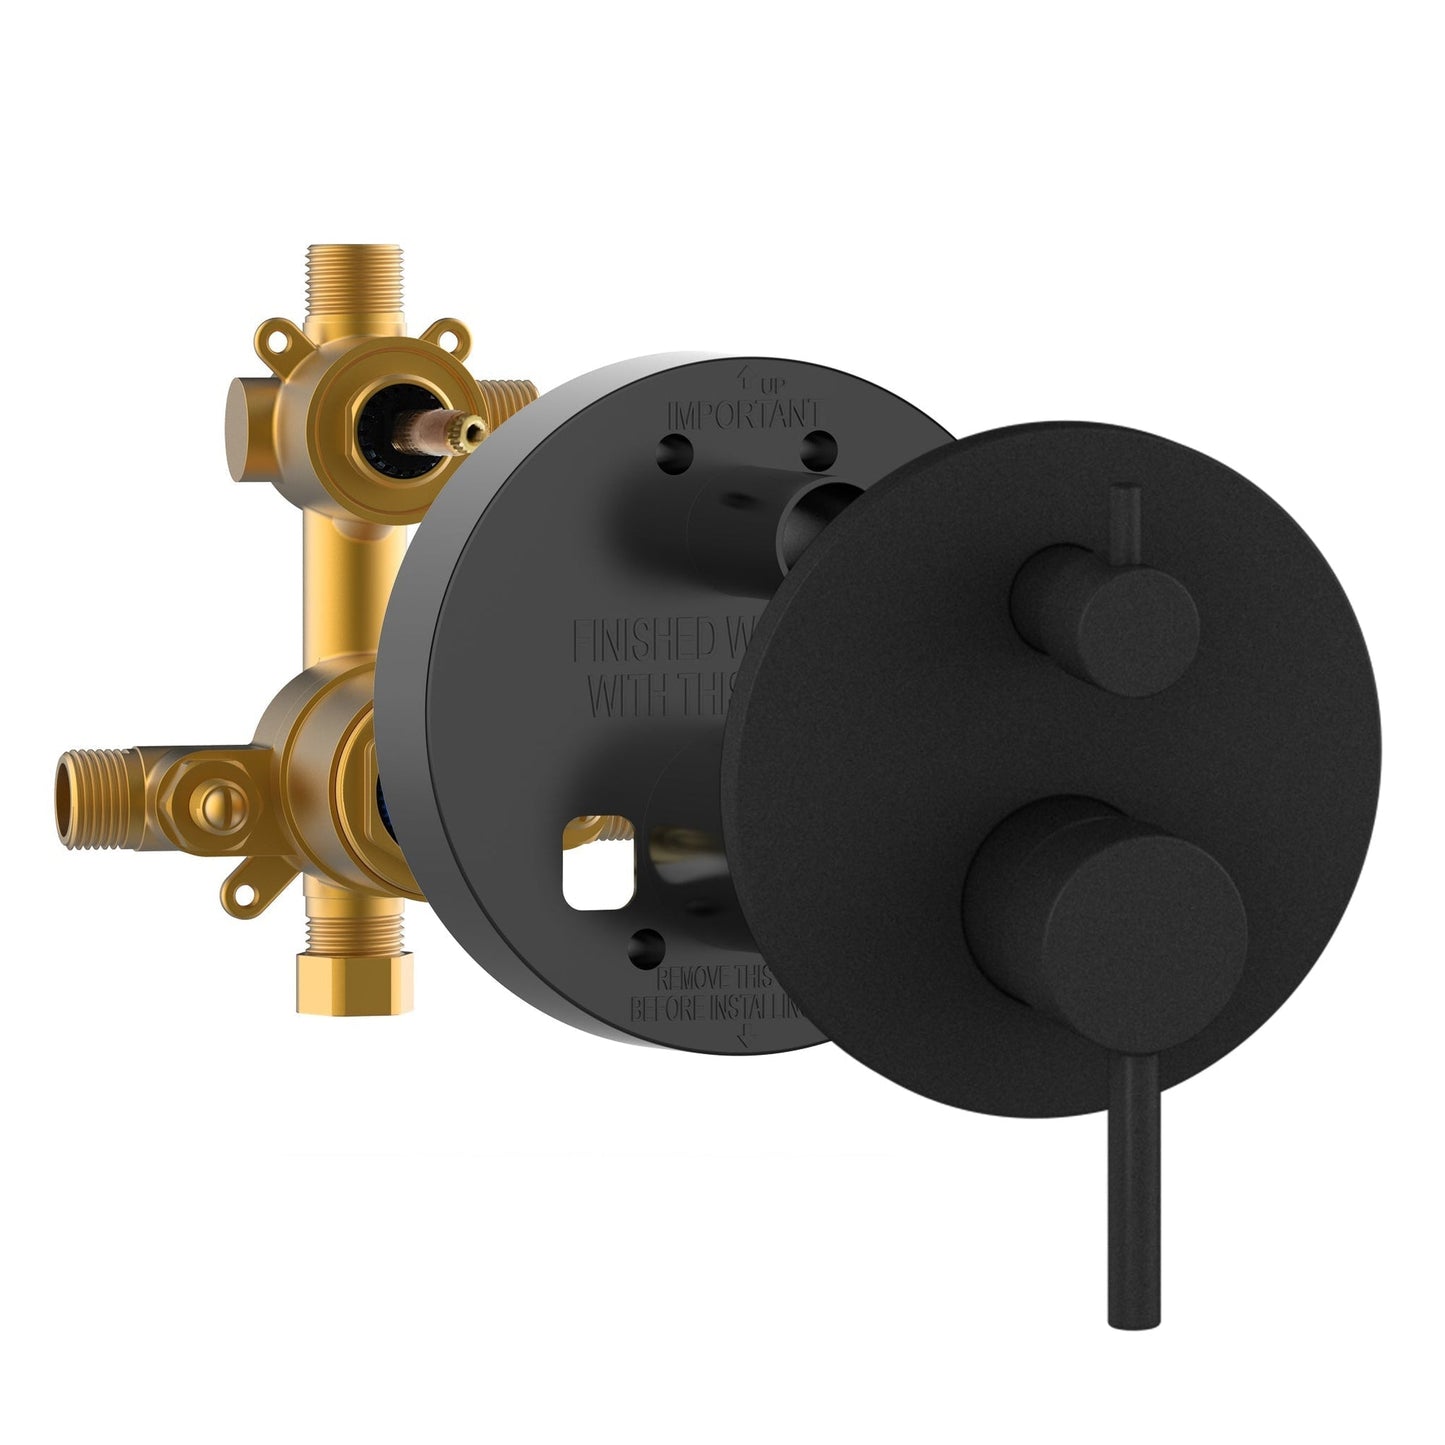 PULSE ShowerSpas Refuge Rain Shower Head 5-Function Hand Shower 1.8 GPM Shower System Combo in Matte Black Finish